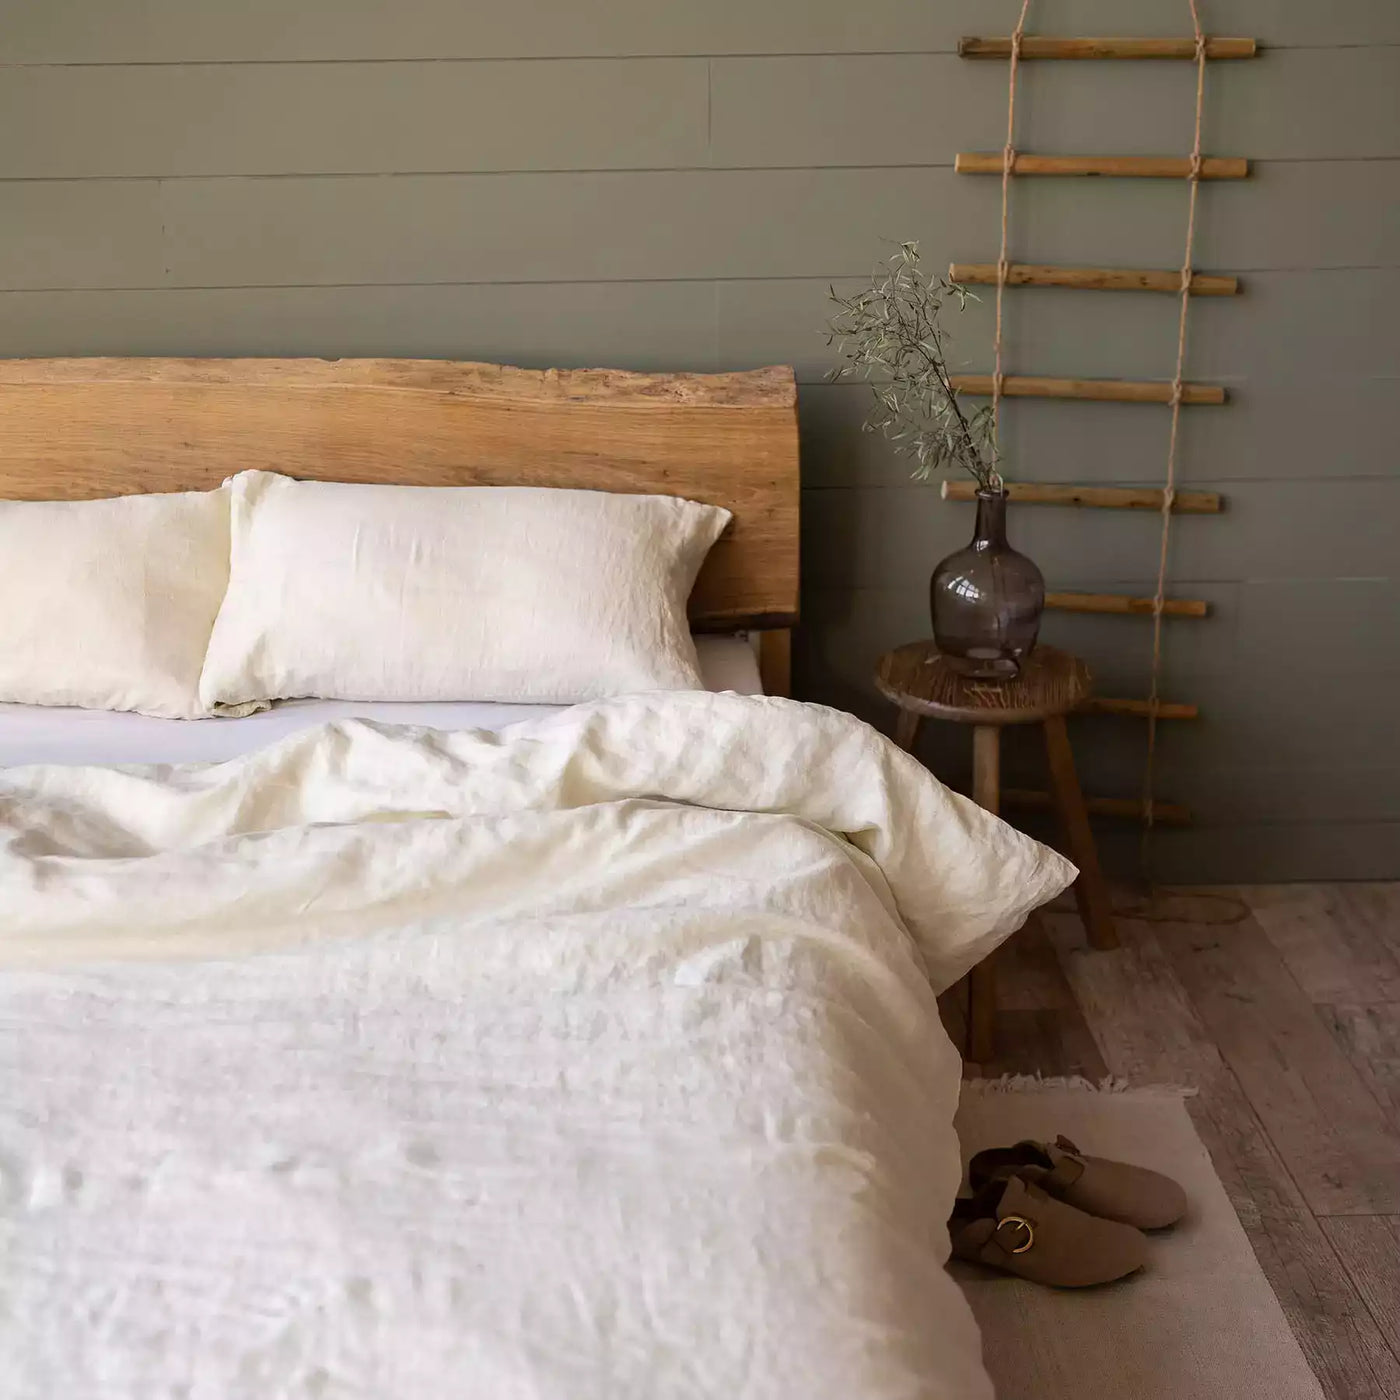 Linen bedding set 135x200 in Vanilla cream